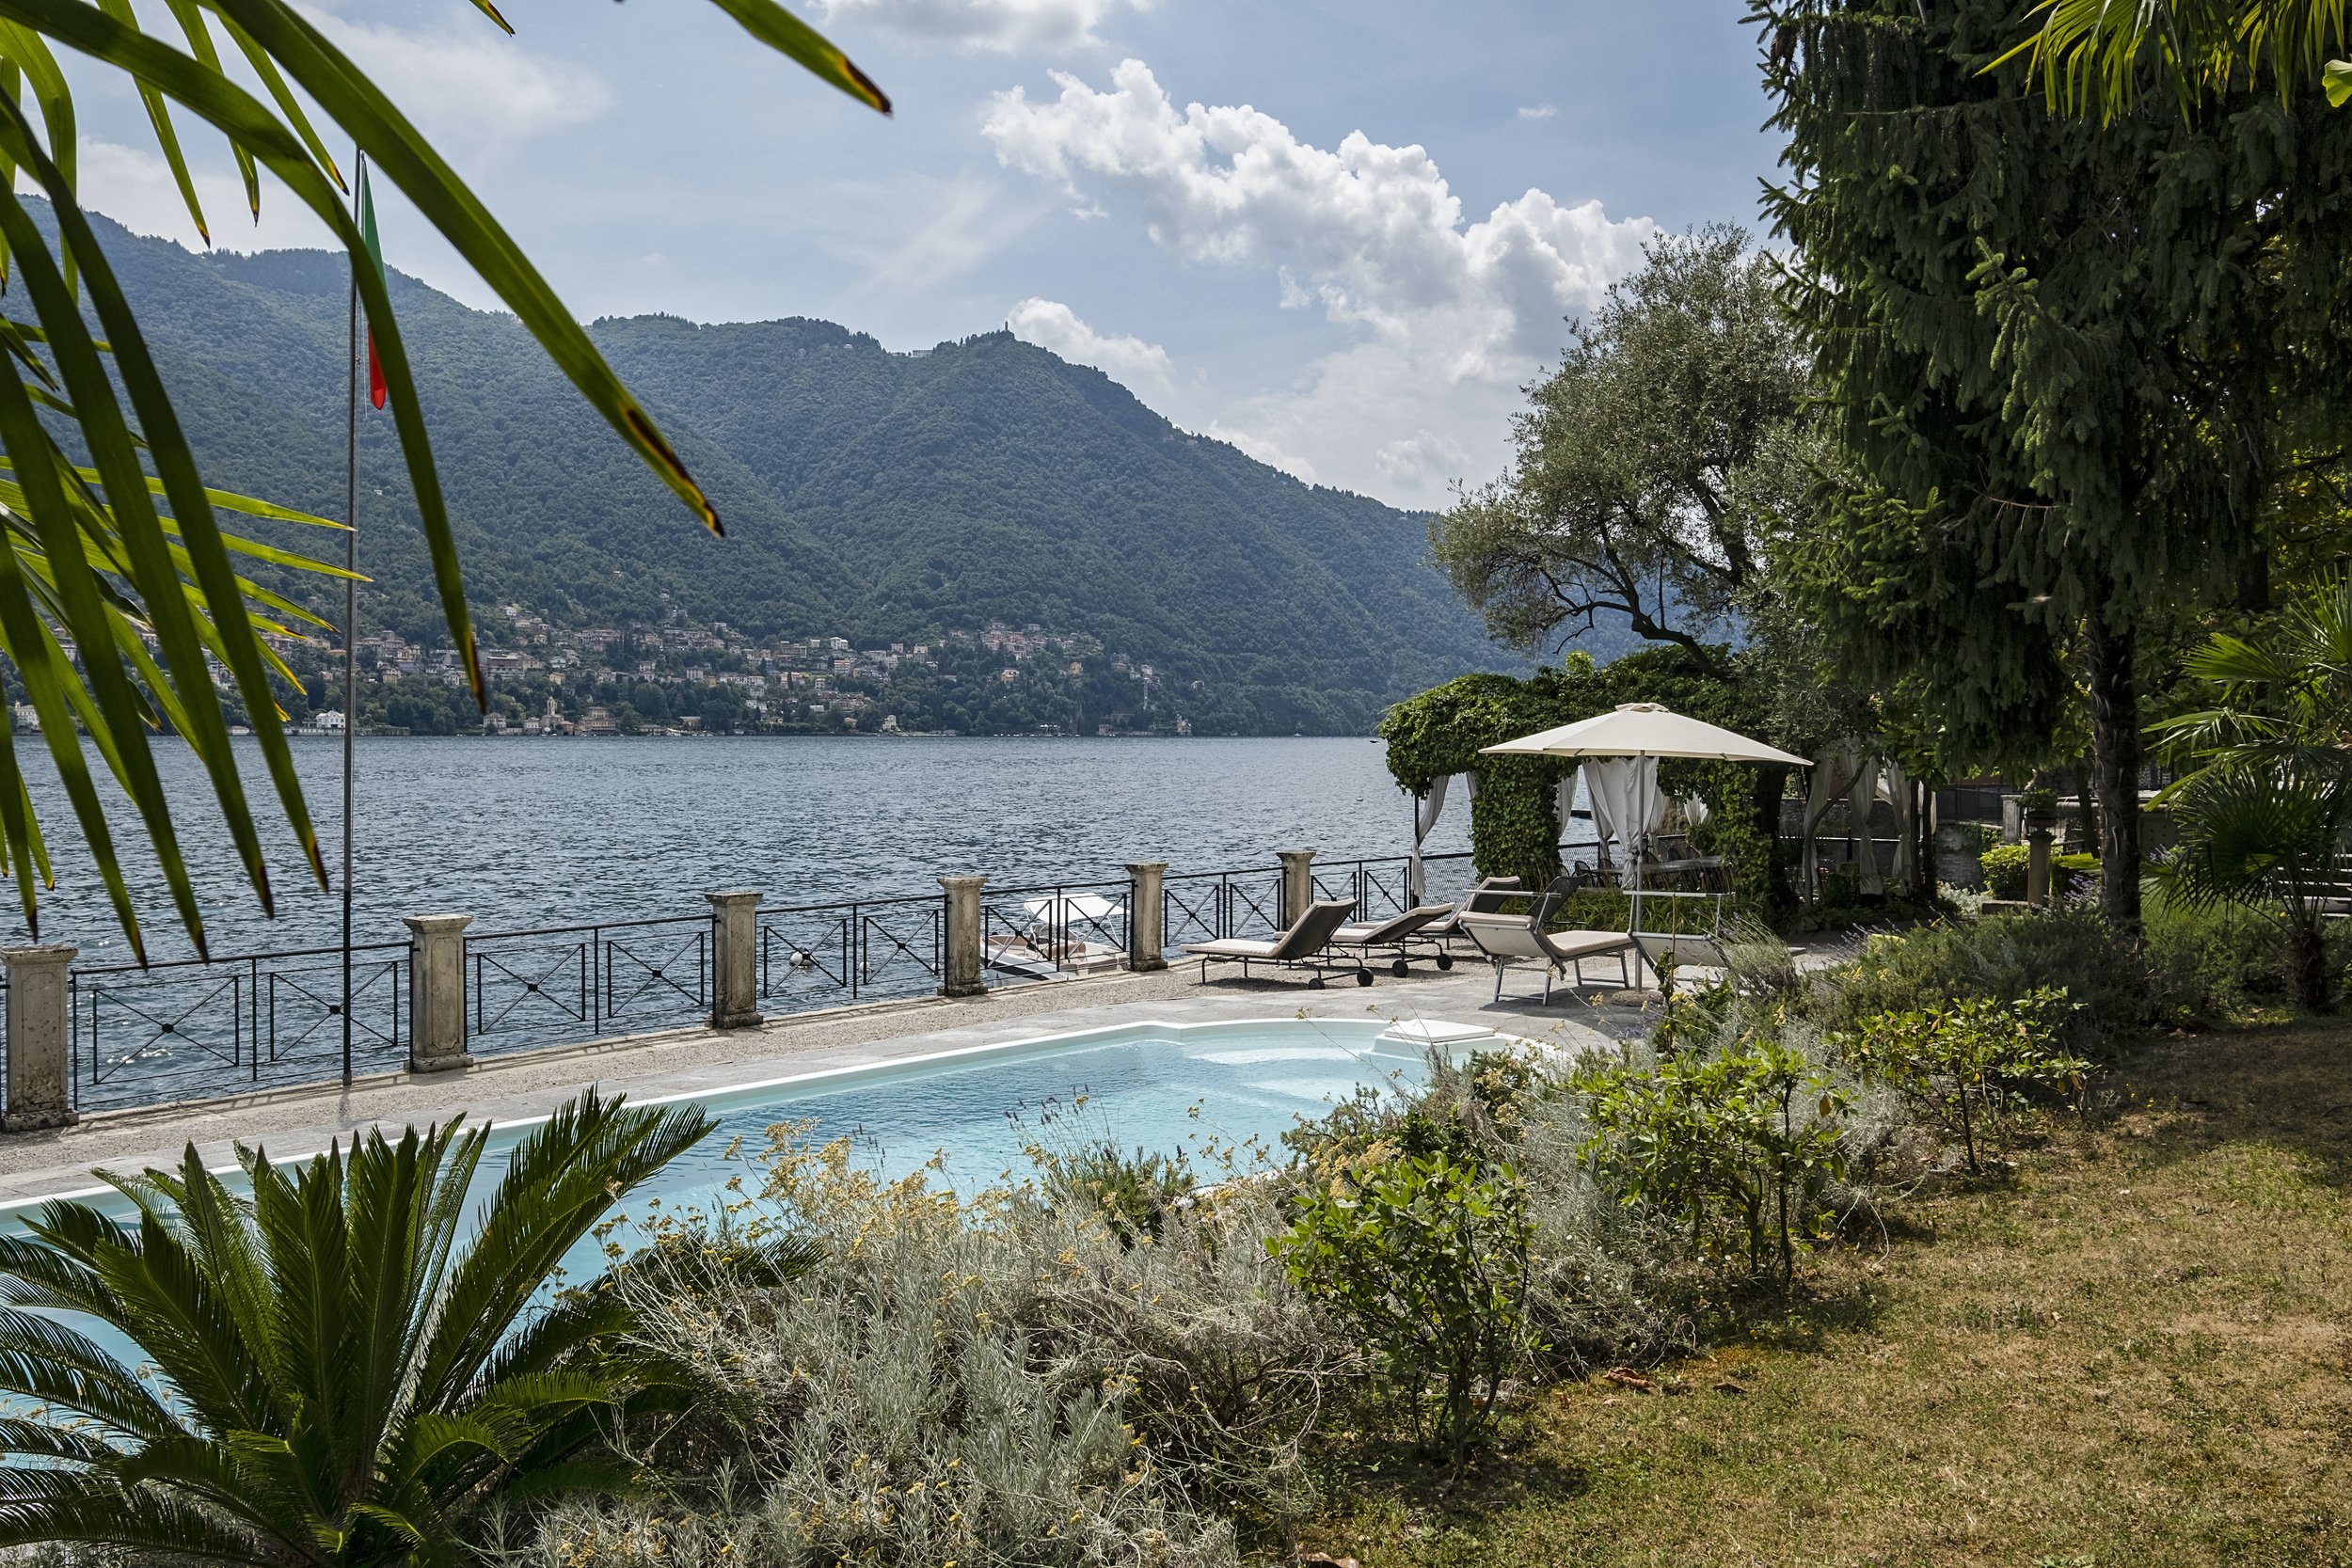 Francis York Historic Italian Villa on the Shores of Lake Como 9.jpg